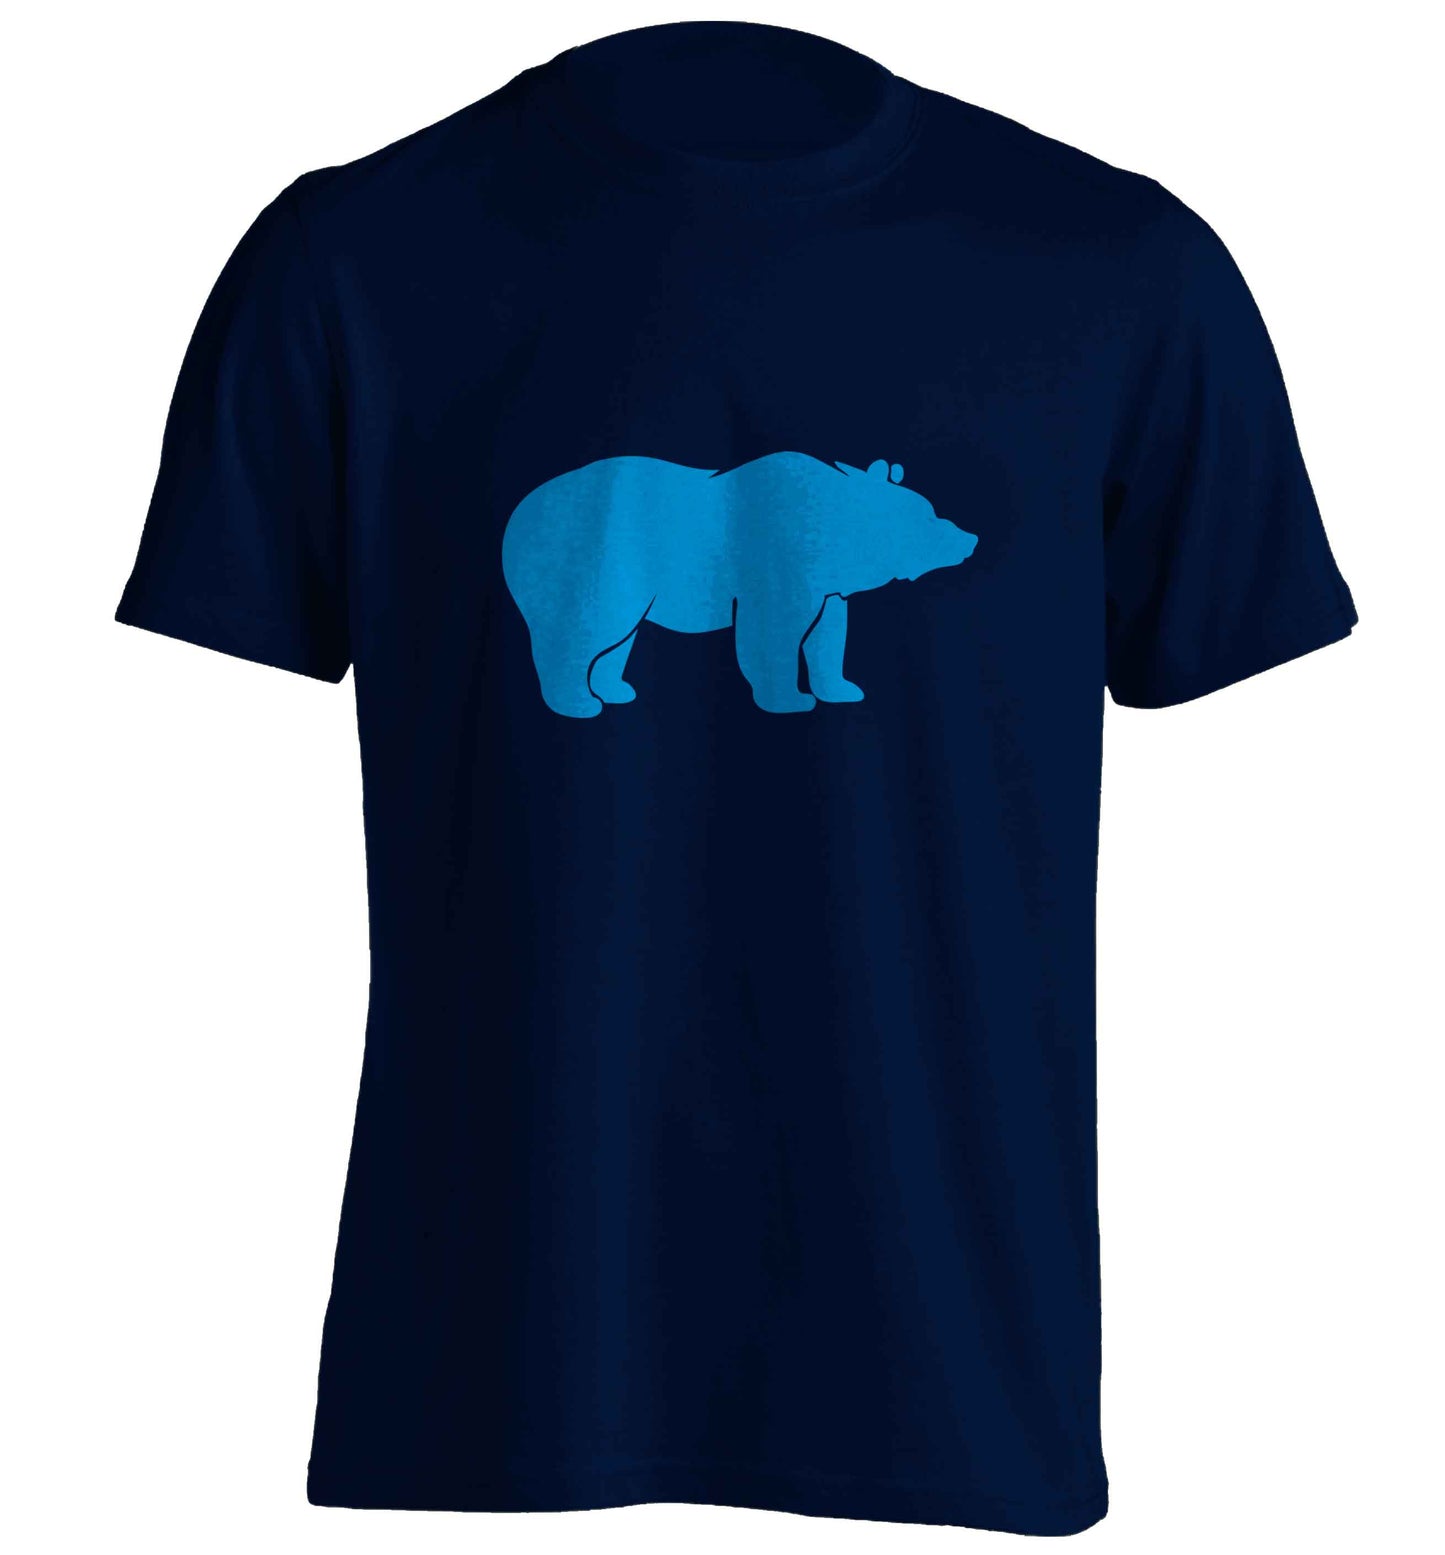 Blue bear adults unisex navy Tshirt 2XL